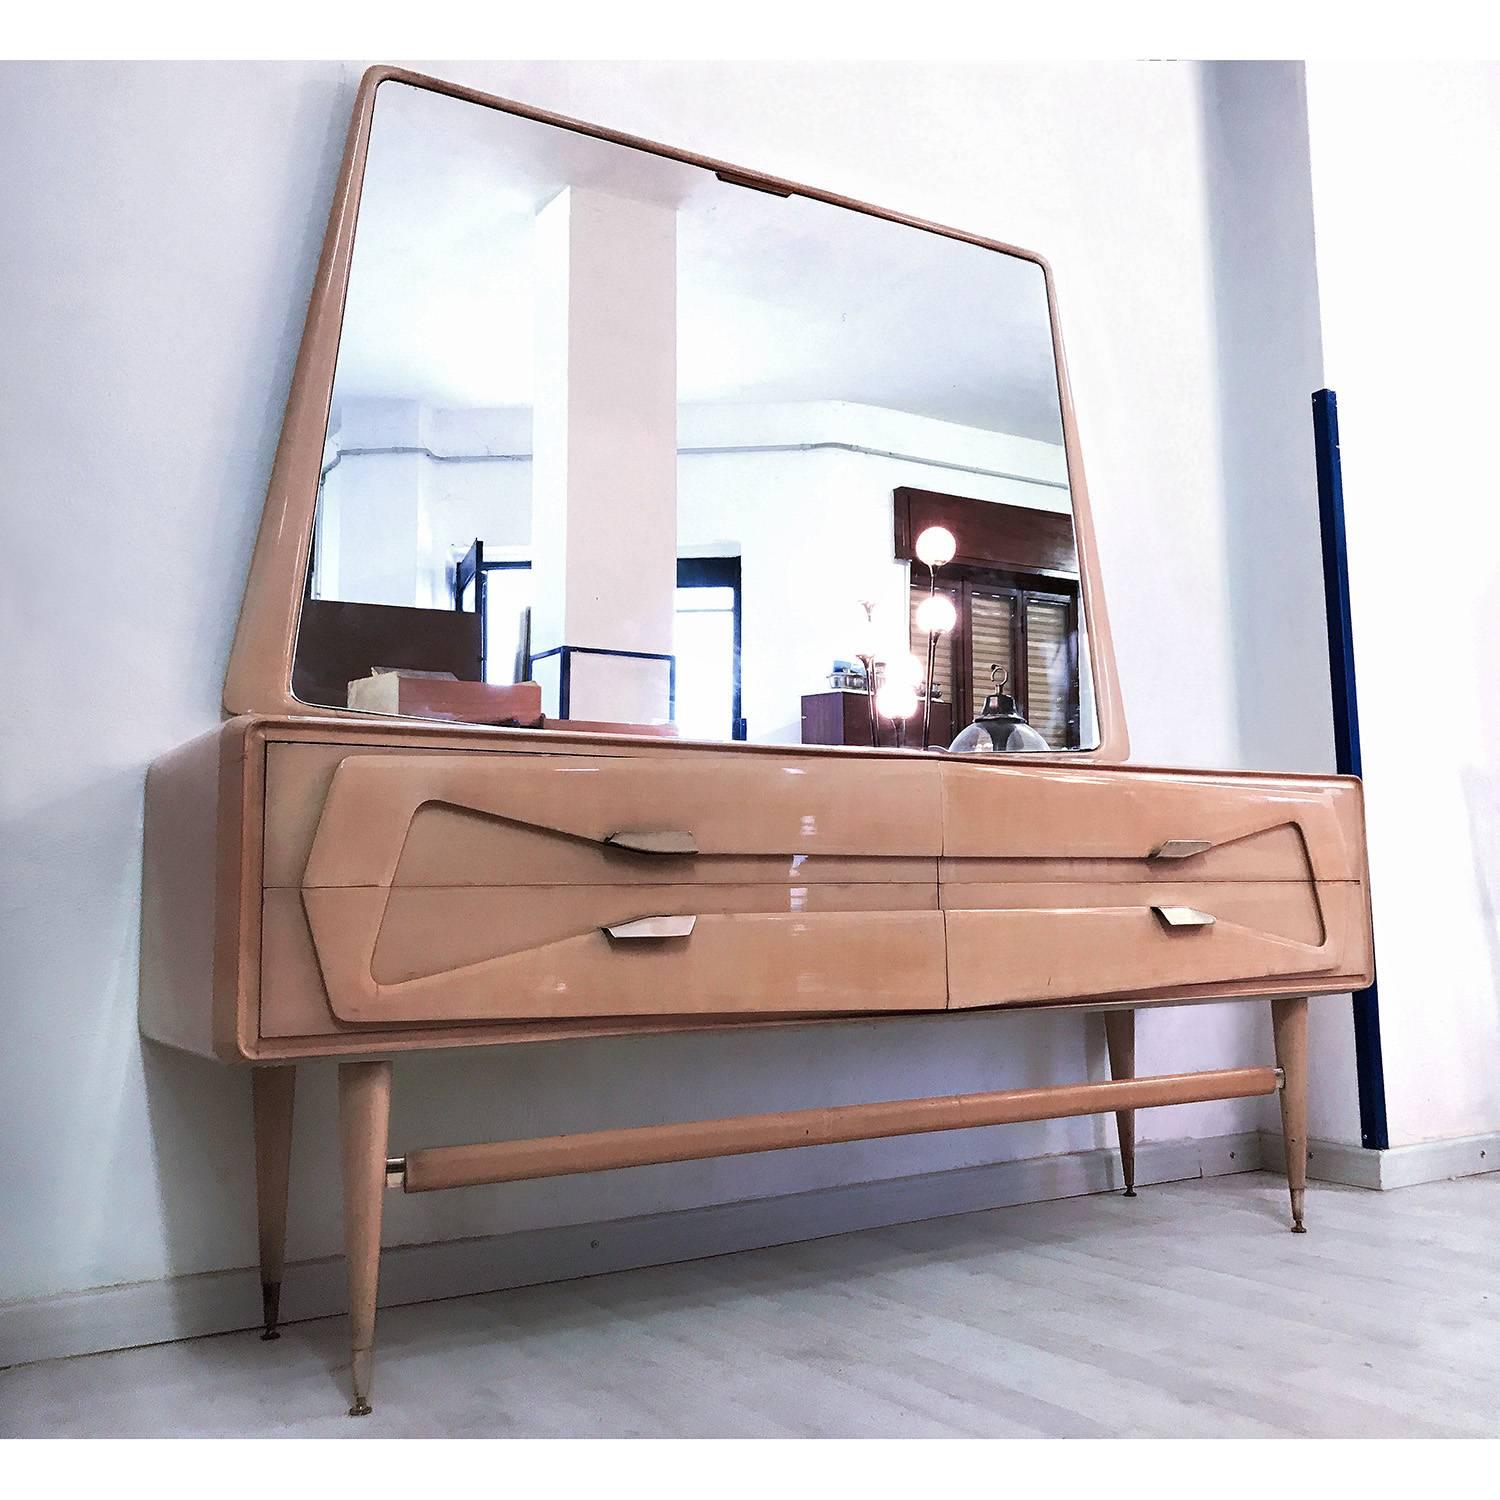 Mid-20th Century Italian Mid-Century Maple Dresser with Mirror attr. to Silvio Cavatorta, 1950s For Sale